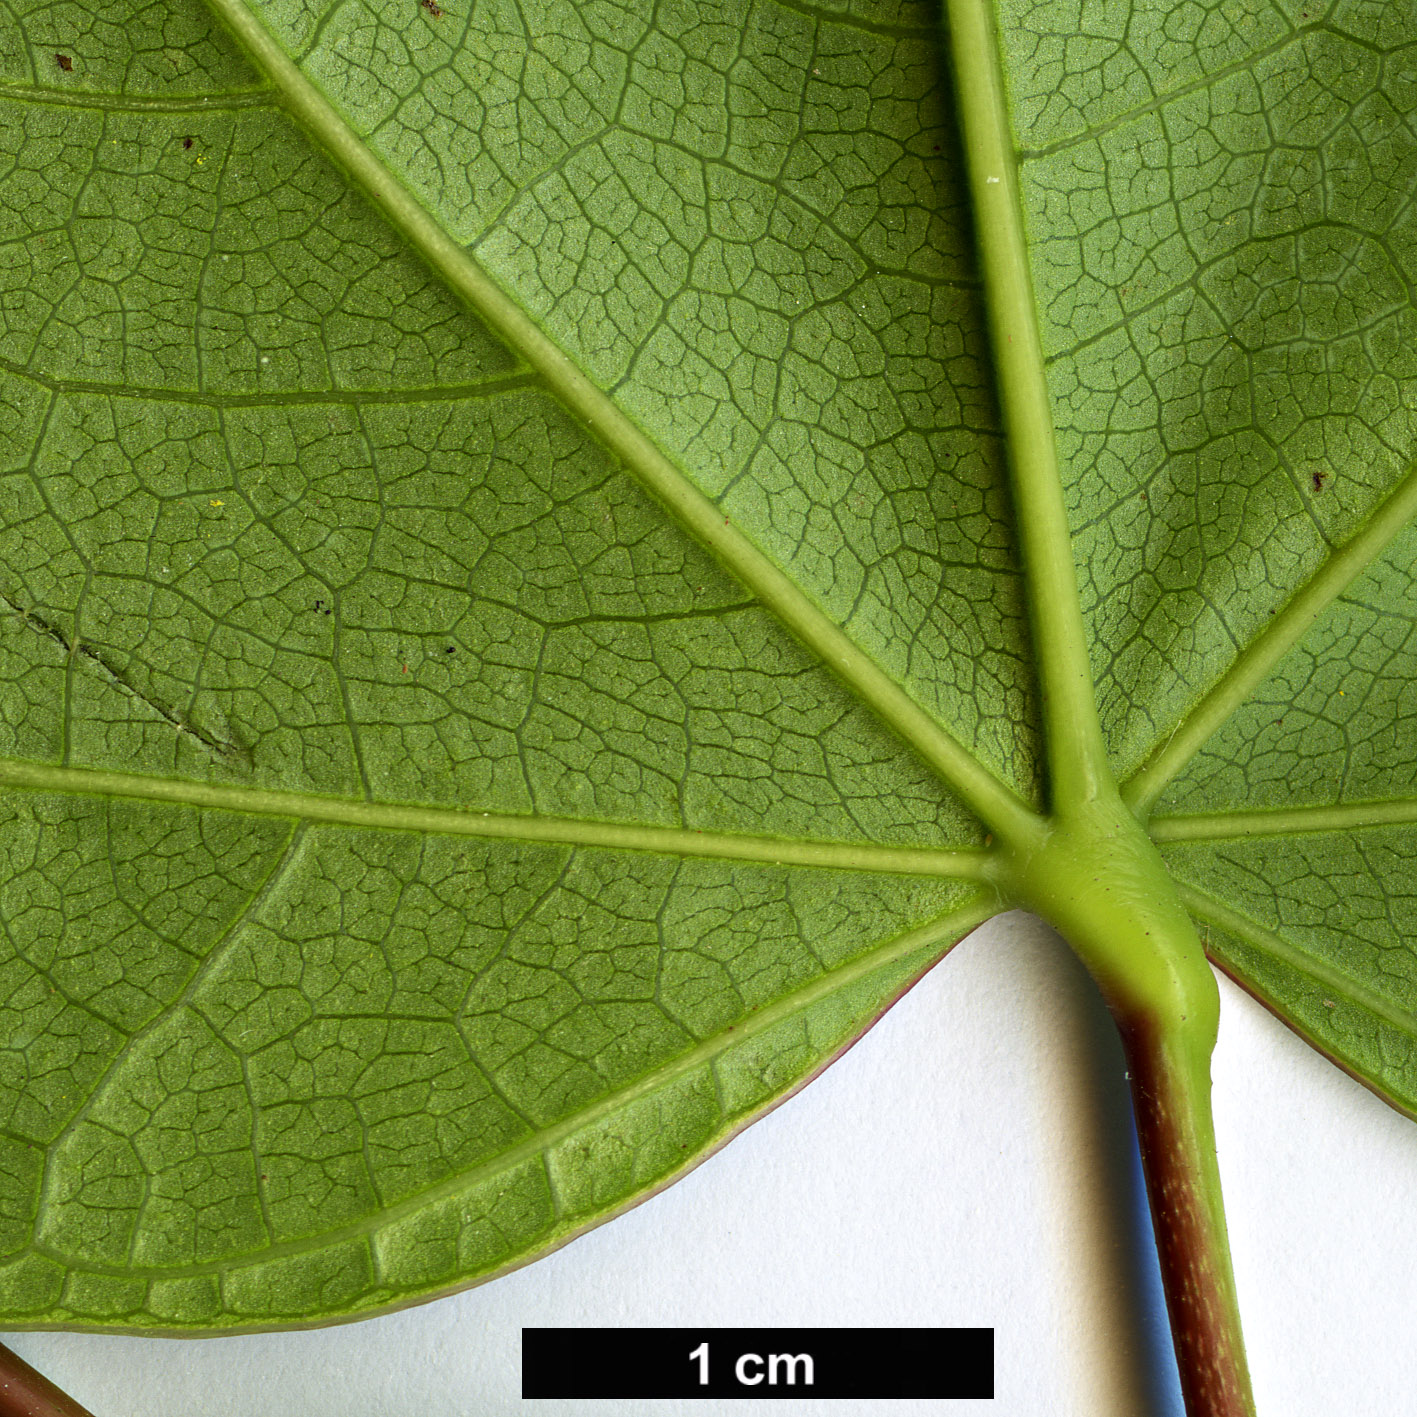 High resolution image: Family: Fabaceae - Genus: Cercis - Taxon: gigantea